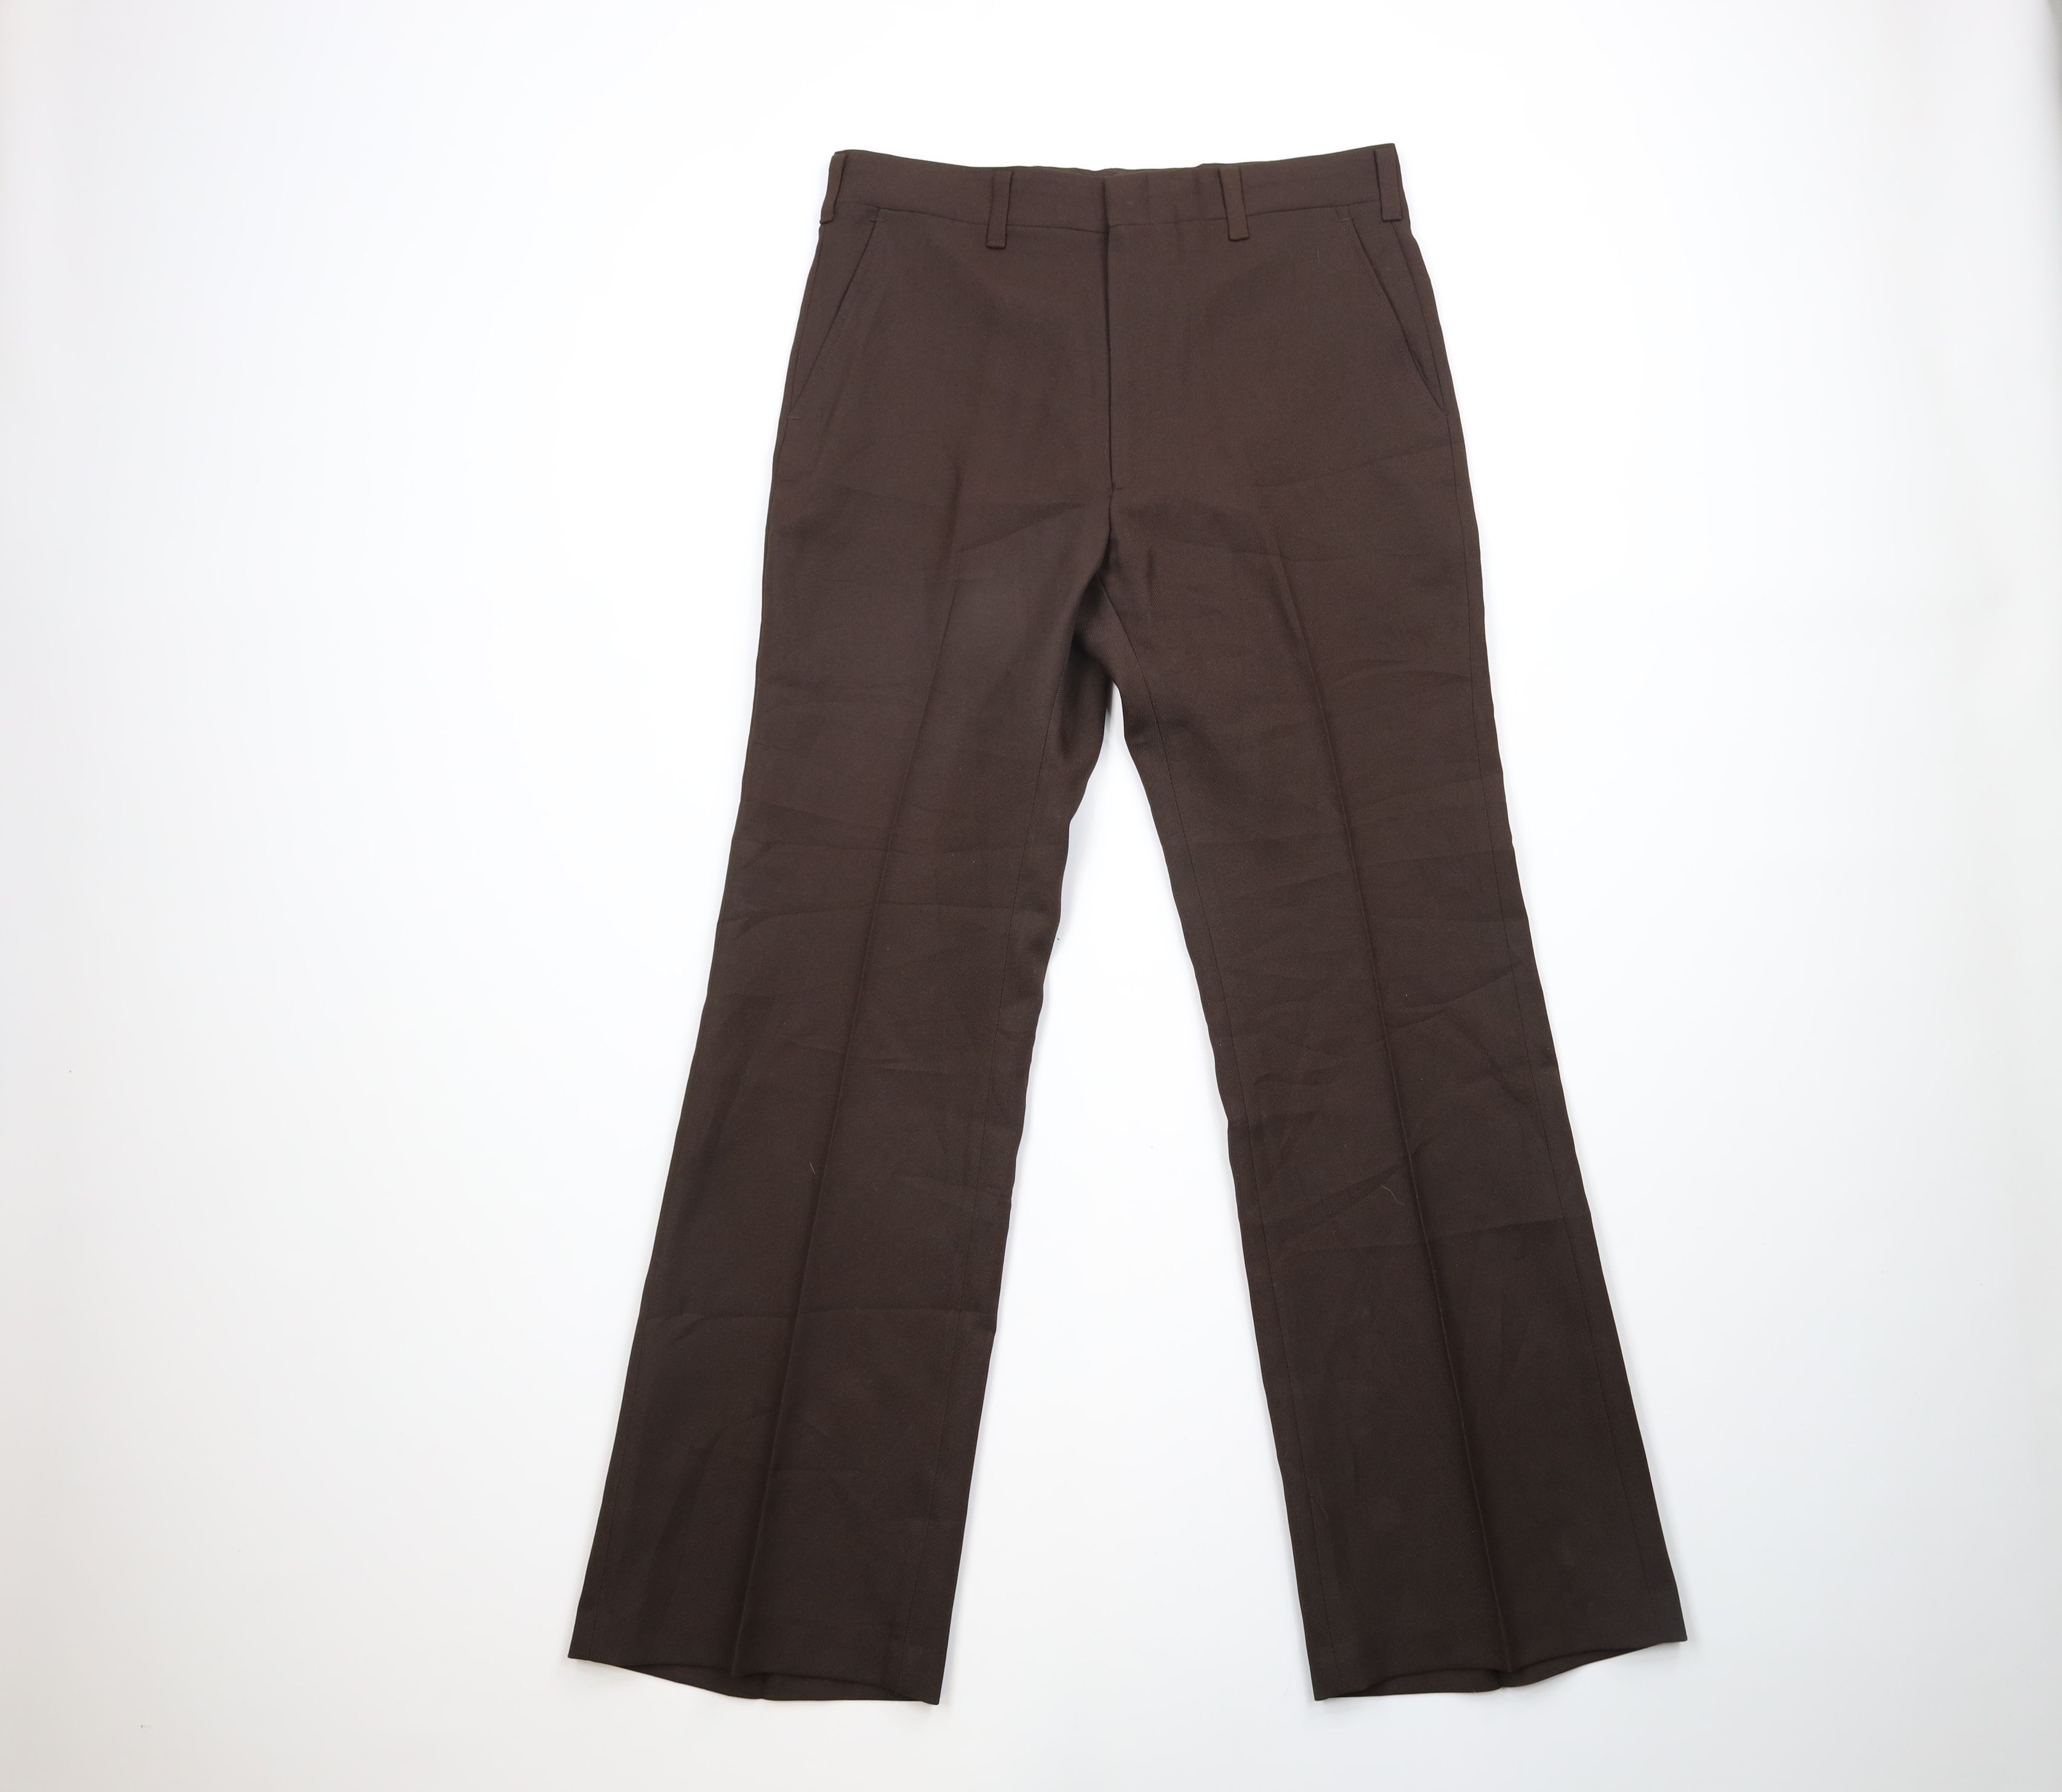 Vintage Vintage 70s Streetwear Knit Flared Bell Bottoms Pants Brown Size US 32 / EU 48 - 1 Preview